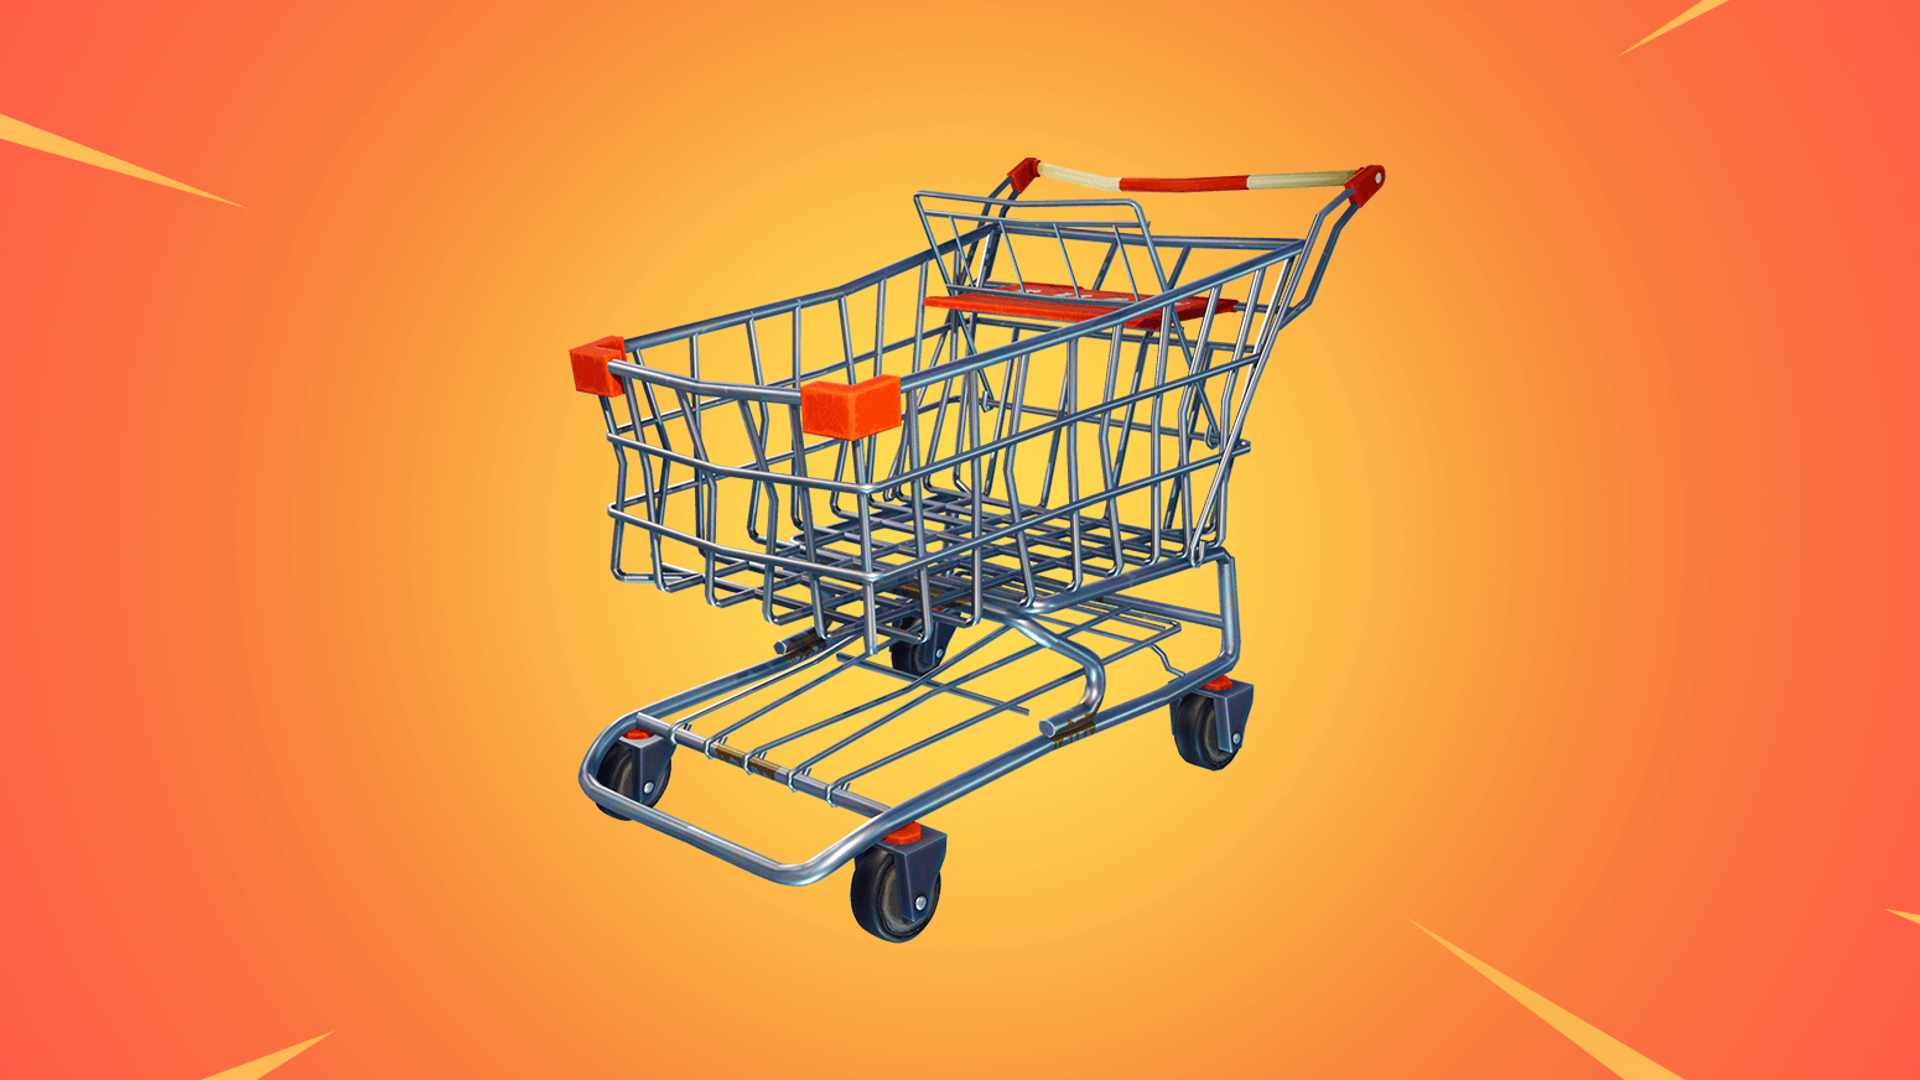 Detail Images Of Shopping Carts Nomer 20